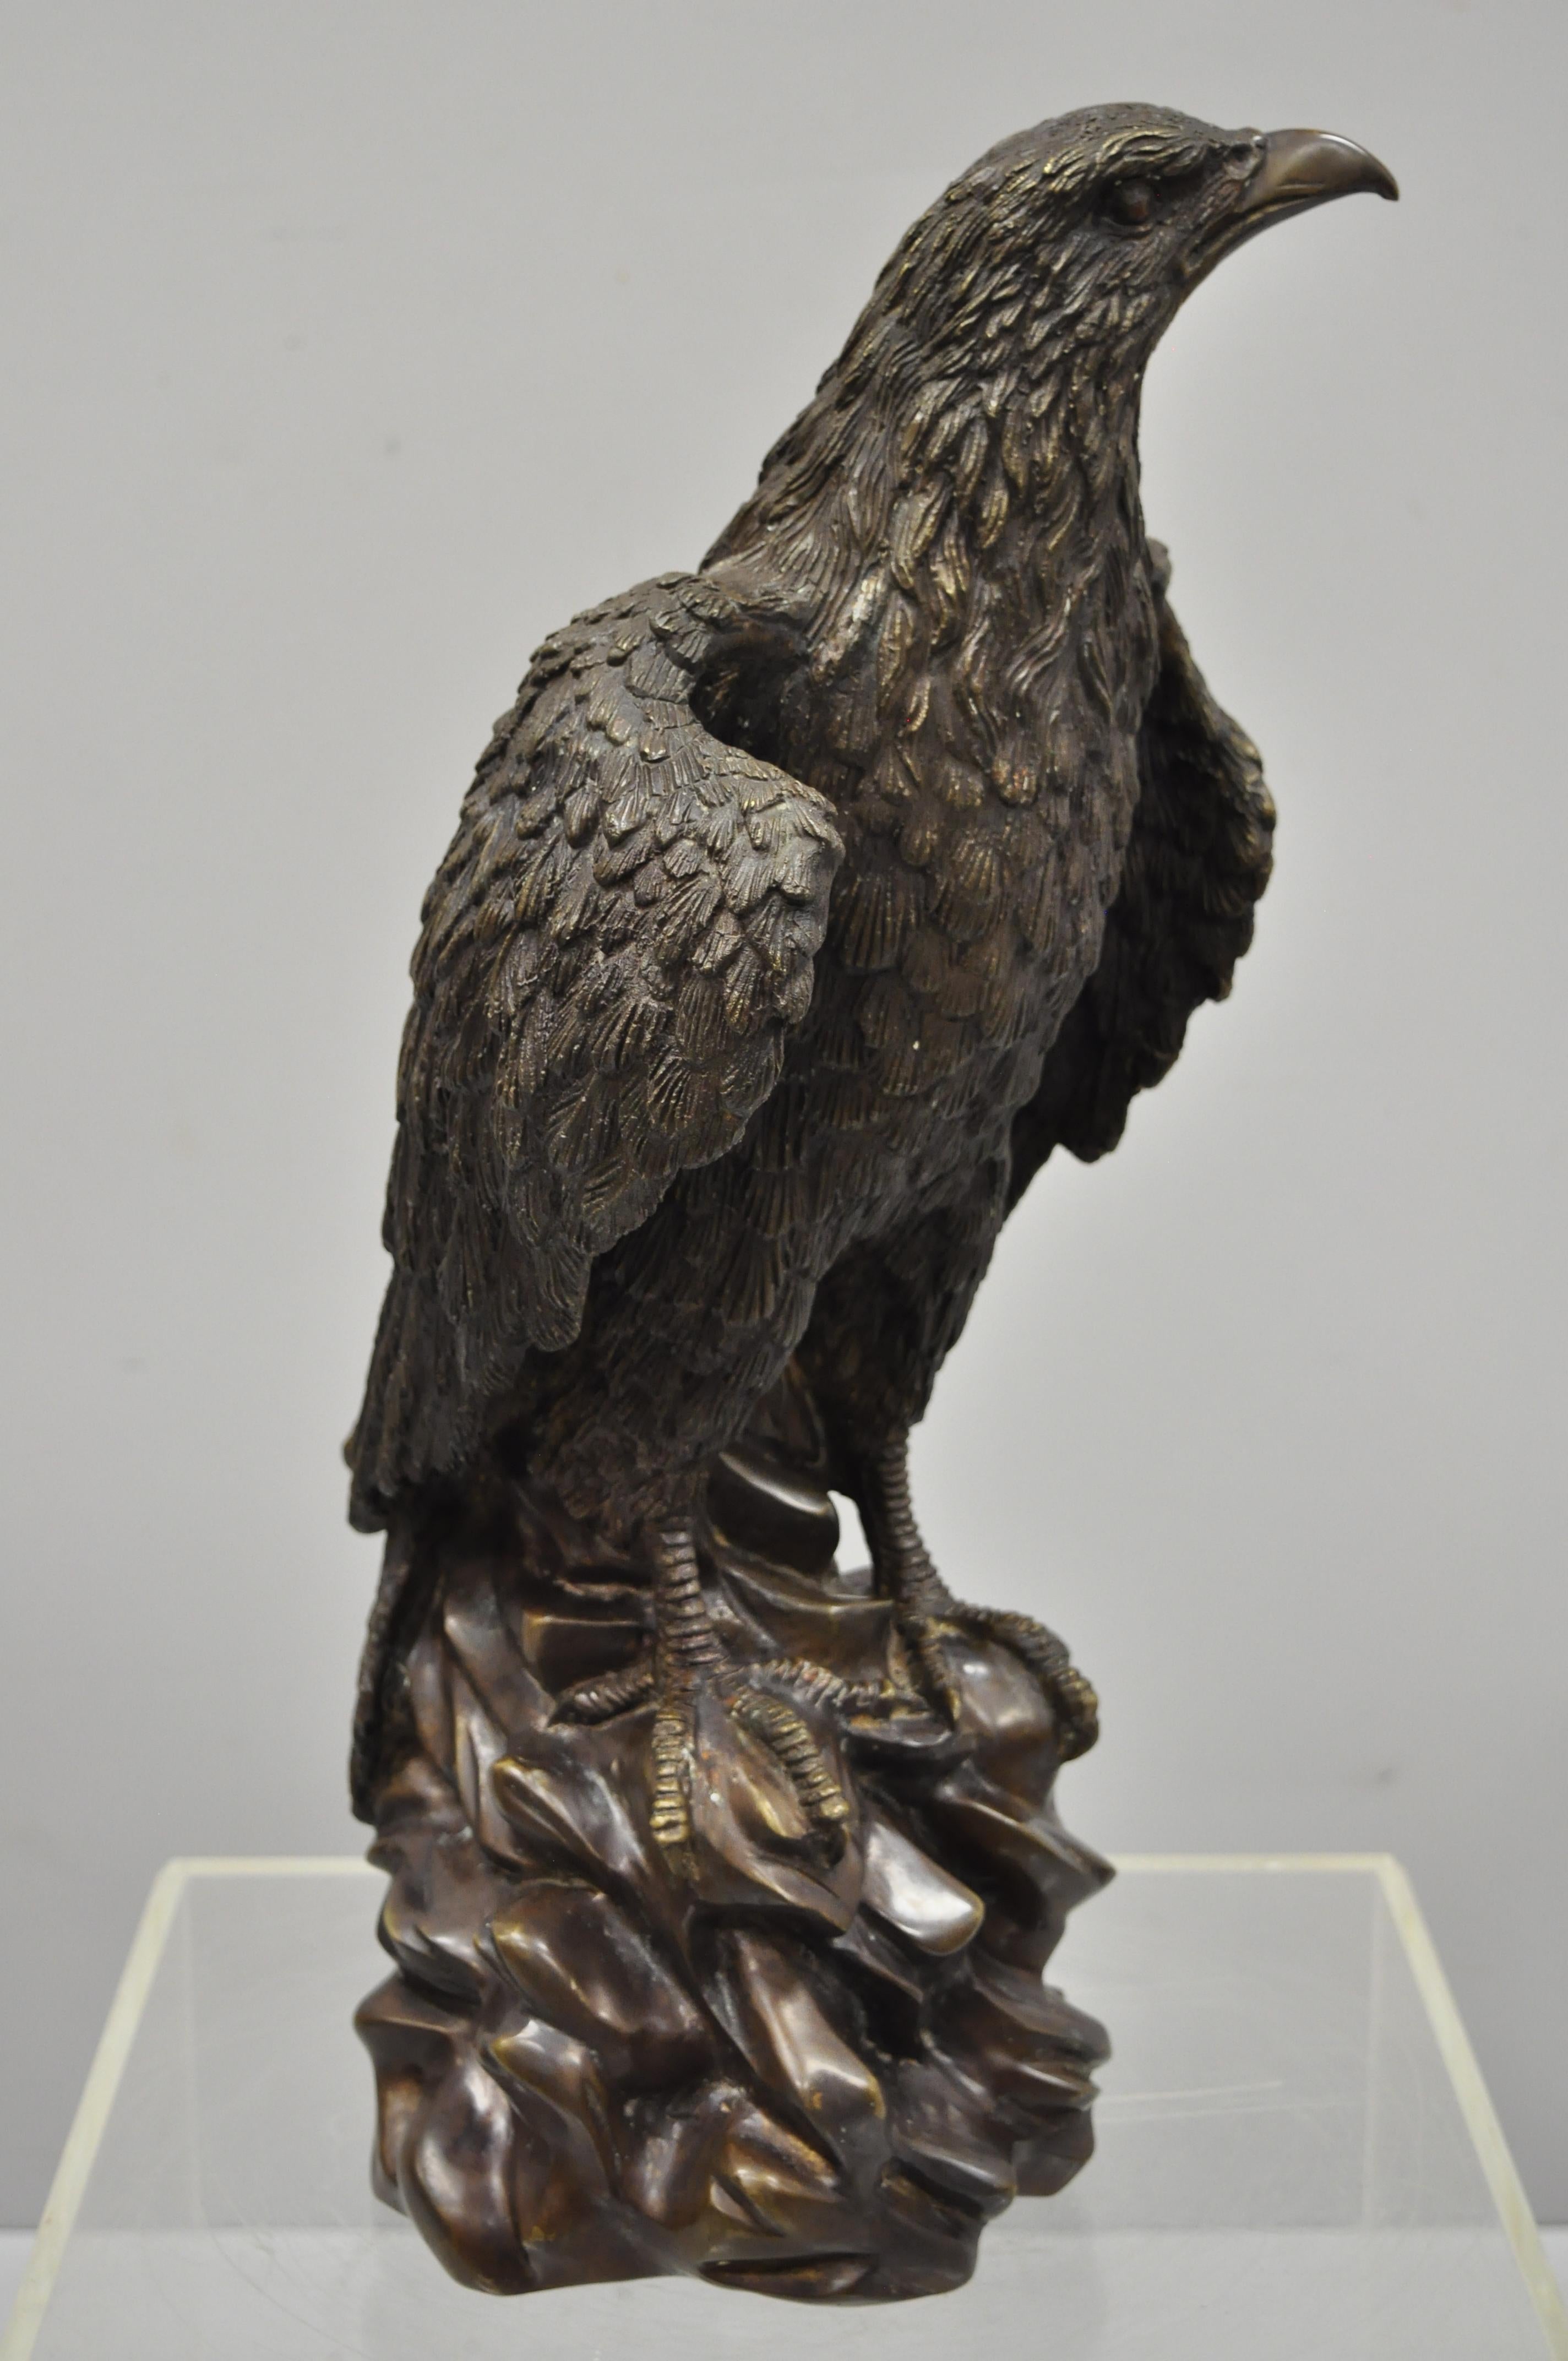 Antique bronze perched eagle above rocks, 22